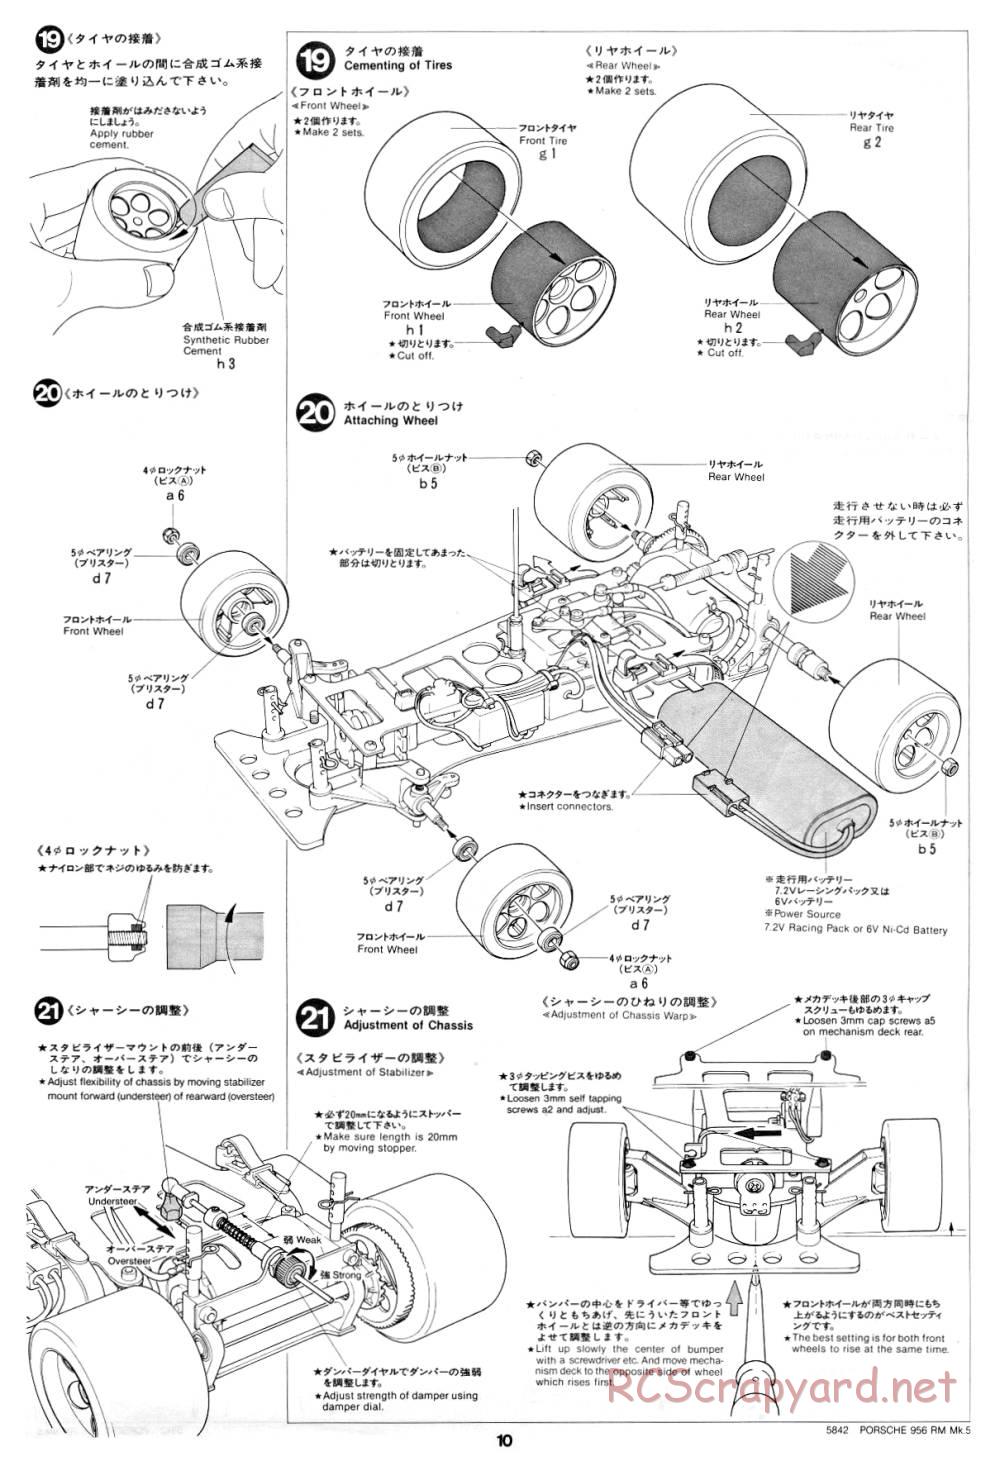 Tamiya - Porsche 956 - RM MK.5 - 58042 - Manual - Page 10